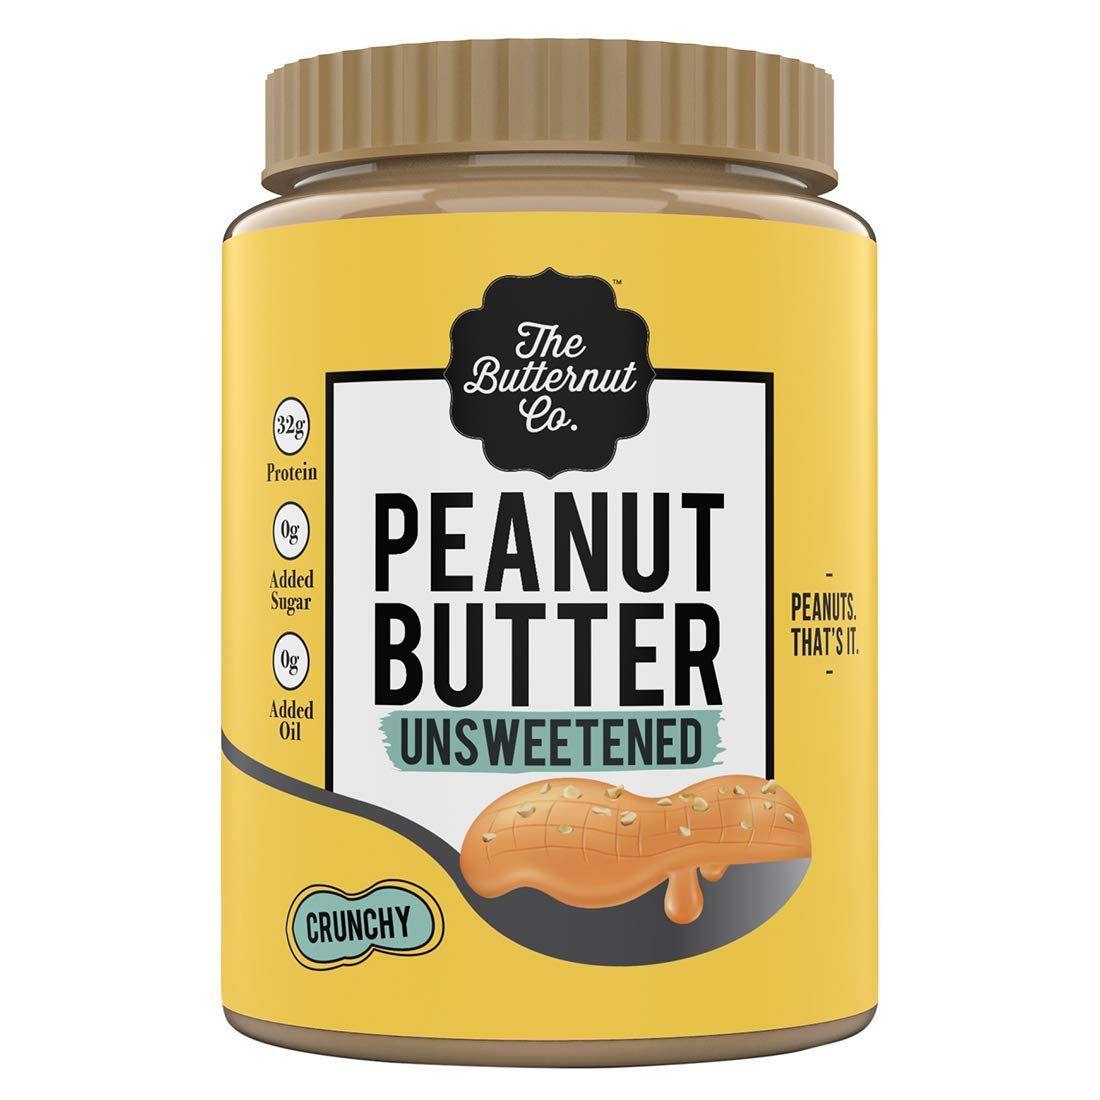 The Butternut Co Peanut Butter Crunchy Image